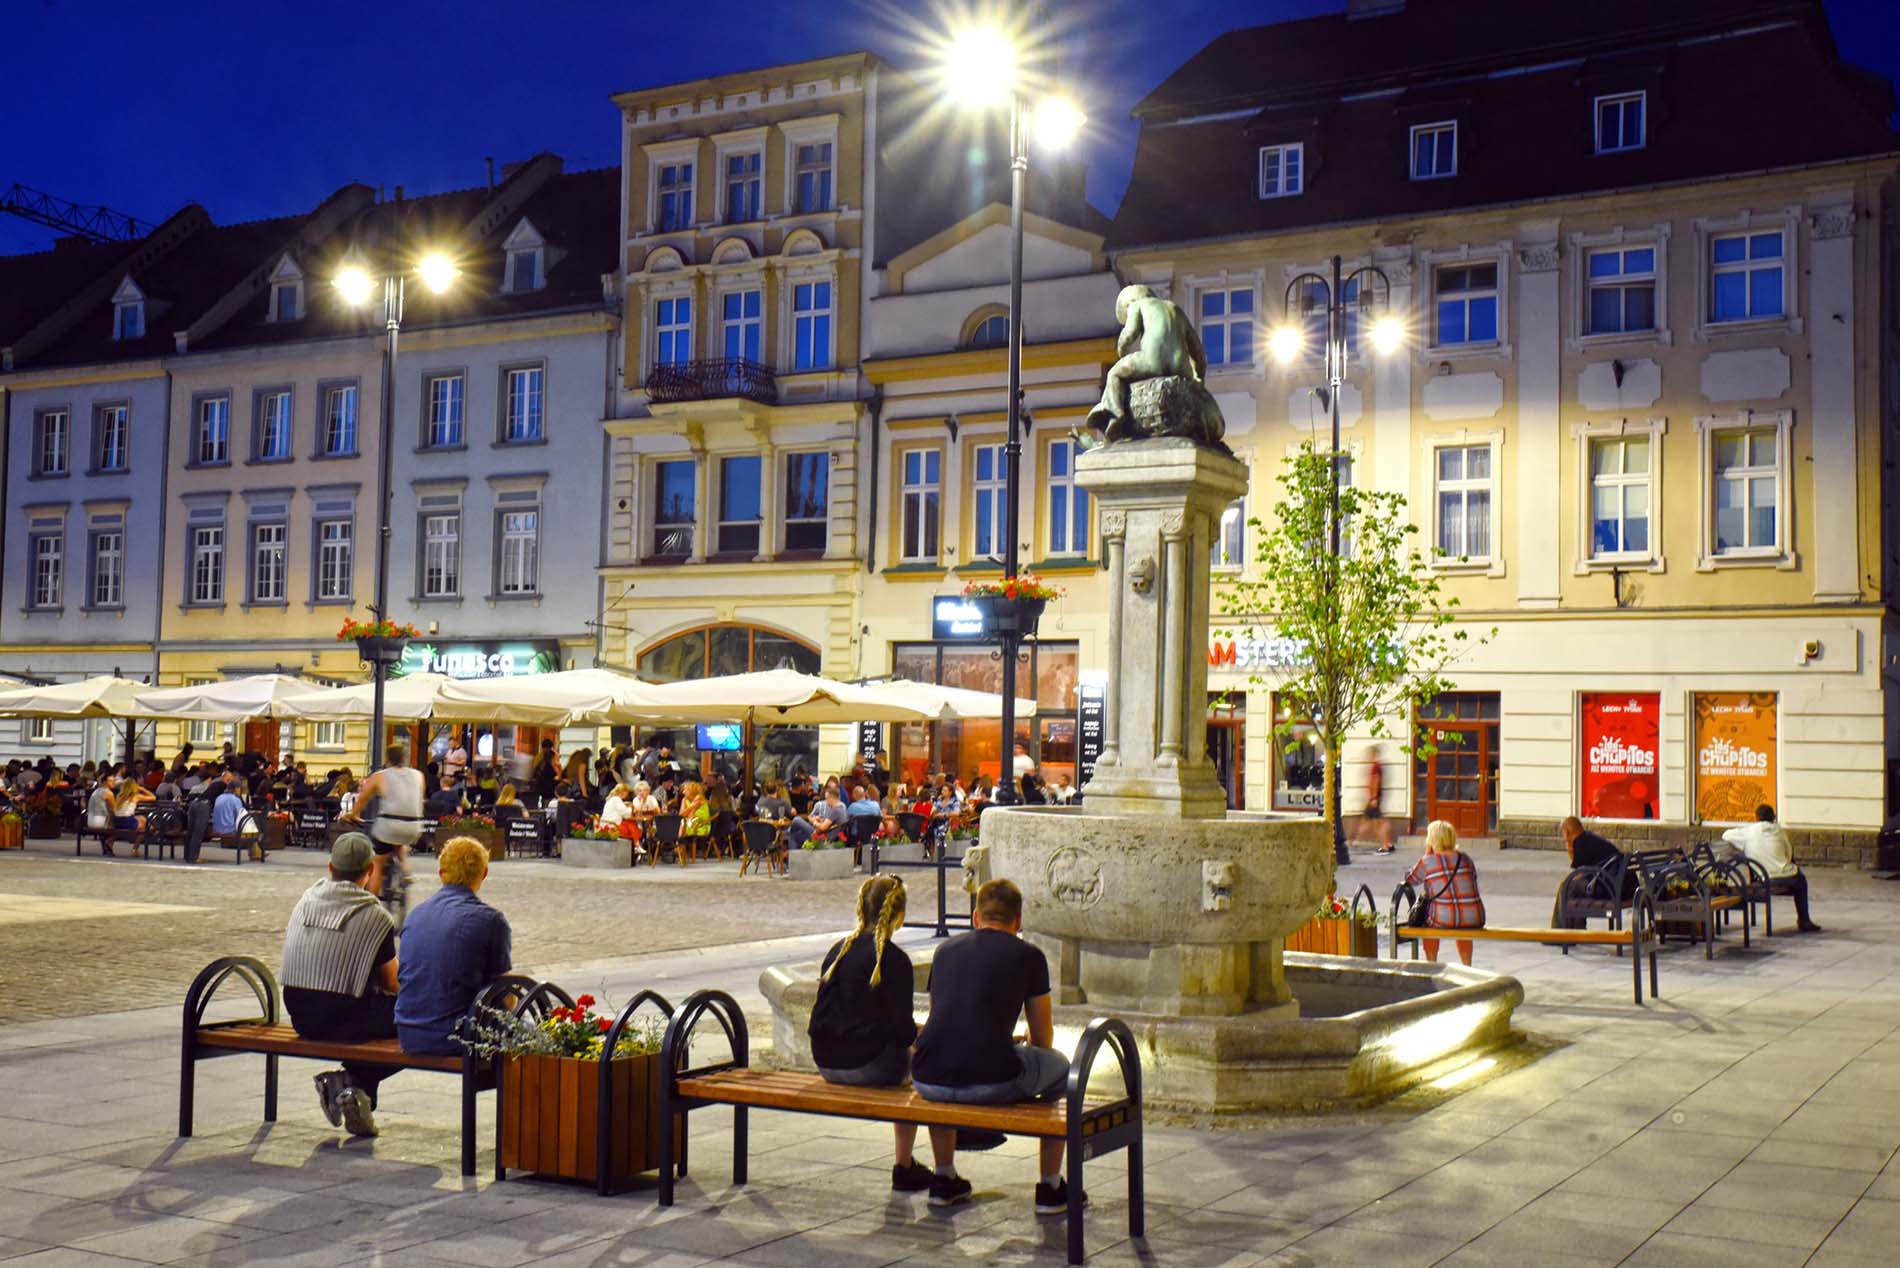 Bydgoszcz | Old market square | Fountain